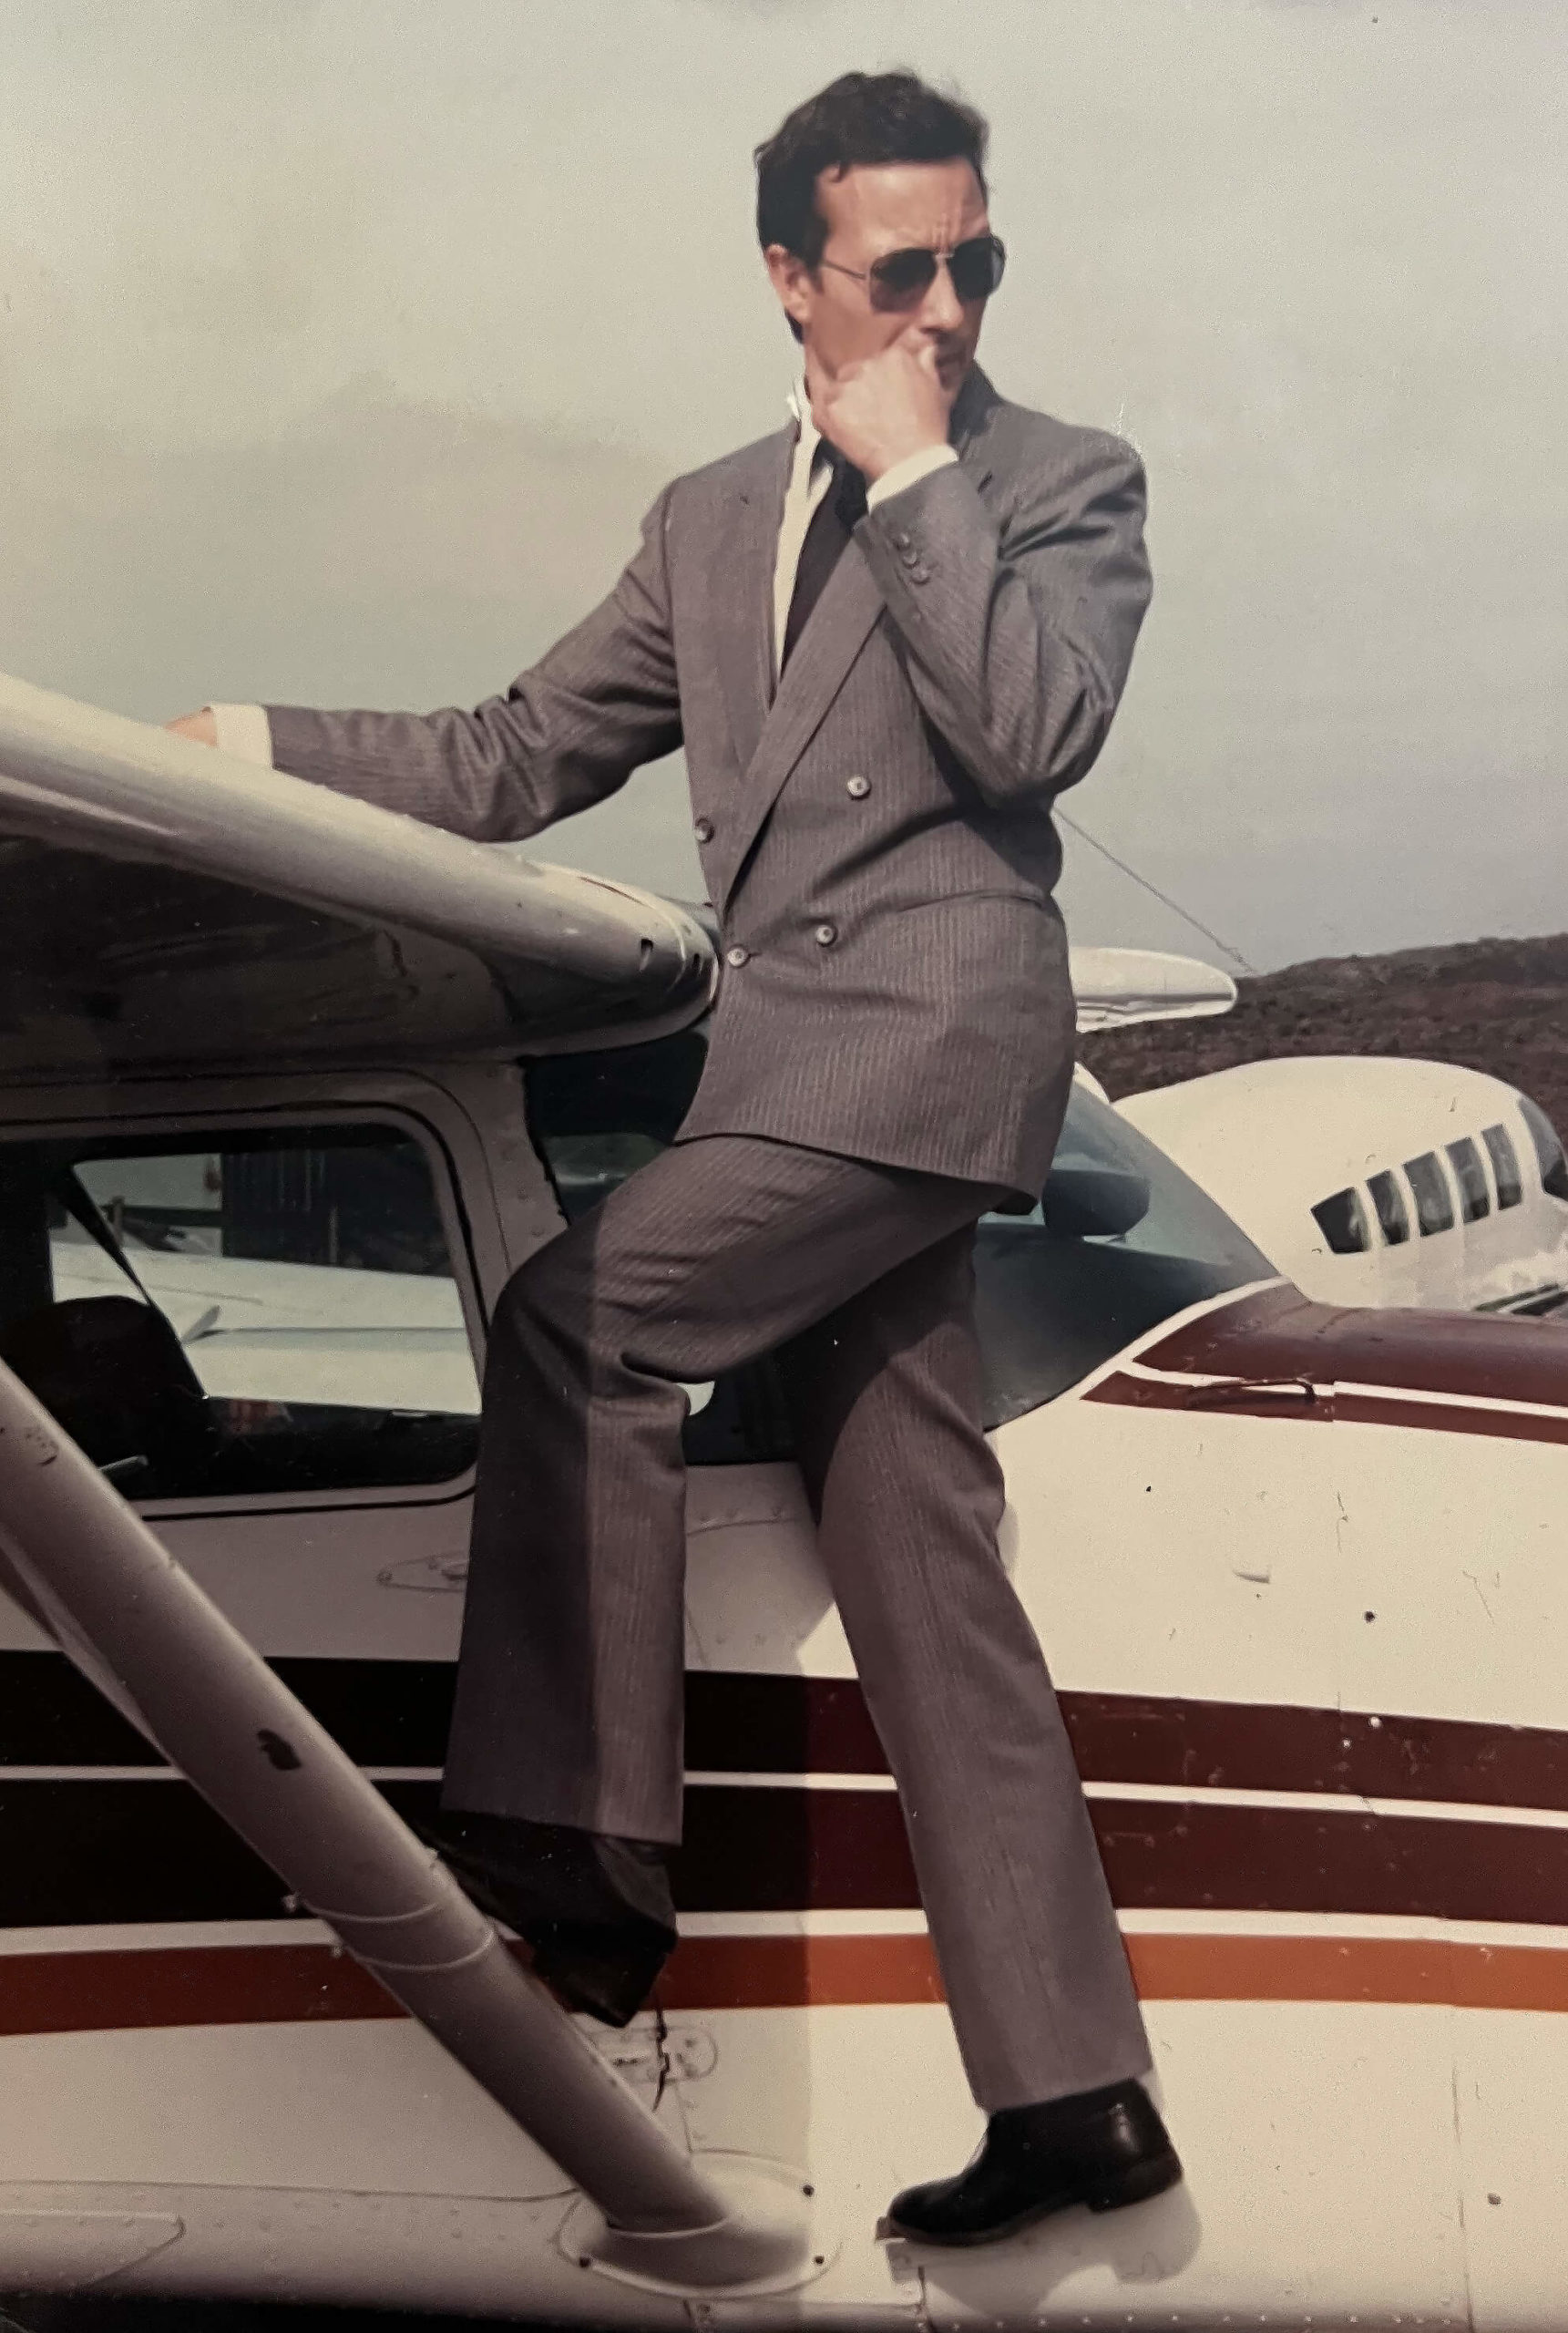 Friðrik Pálsson stands on an airplane